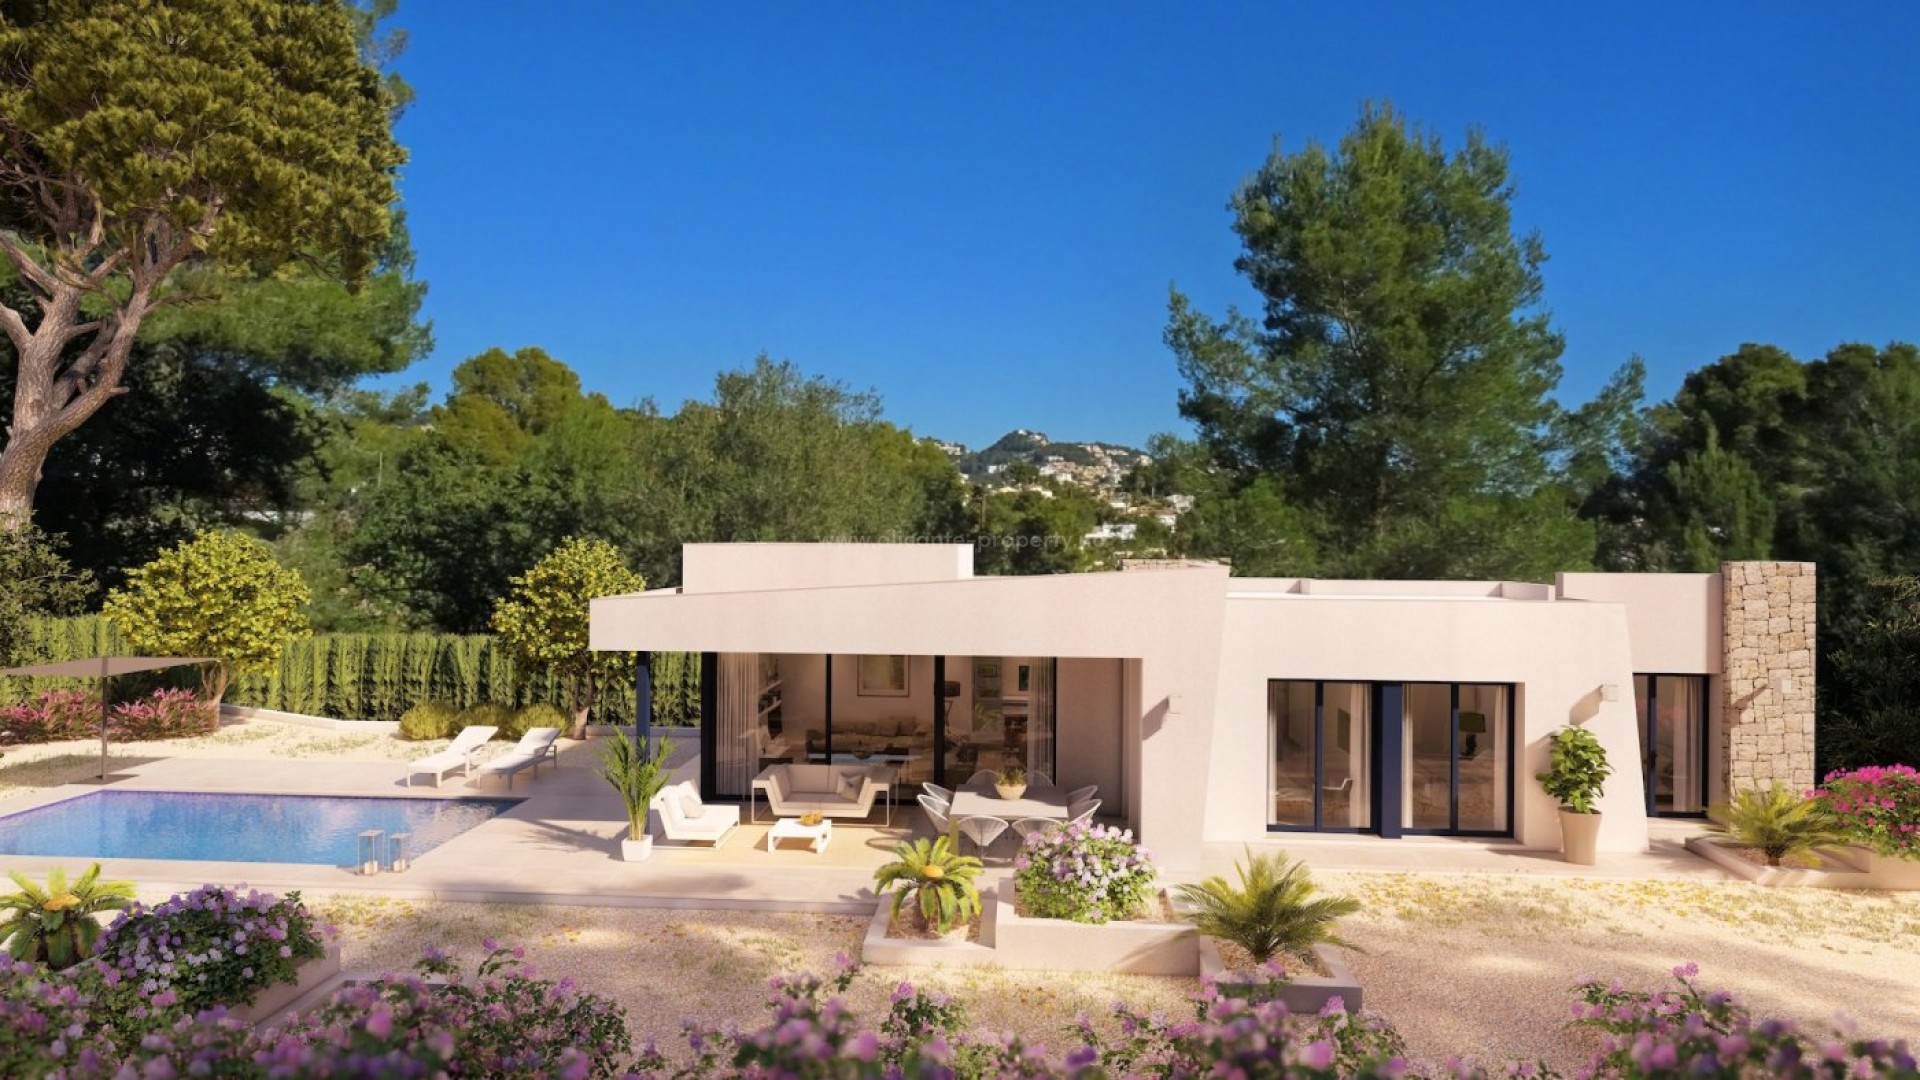 Eksklusiv villa/hus i Fanadix, nær Calpe og Moraira, 3 soverom og 2 bad, basseng, terrasse, veranda, grillområde, parkering